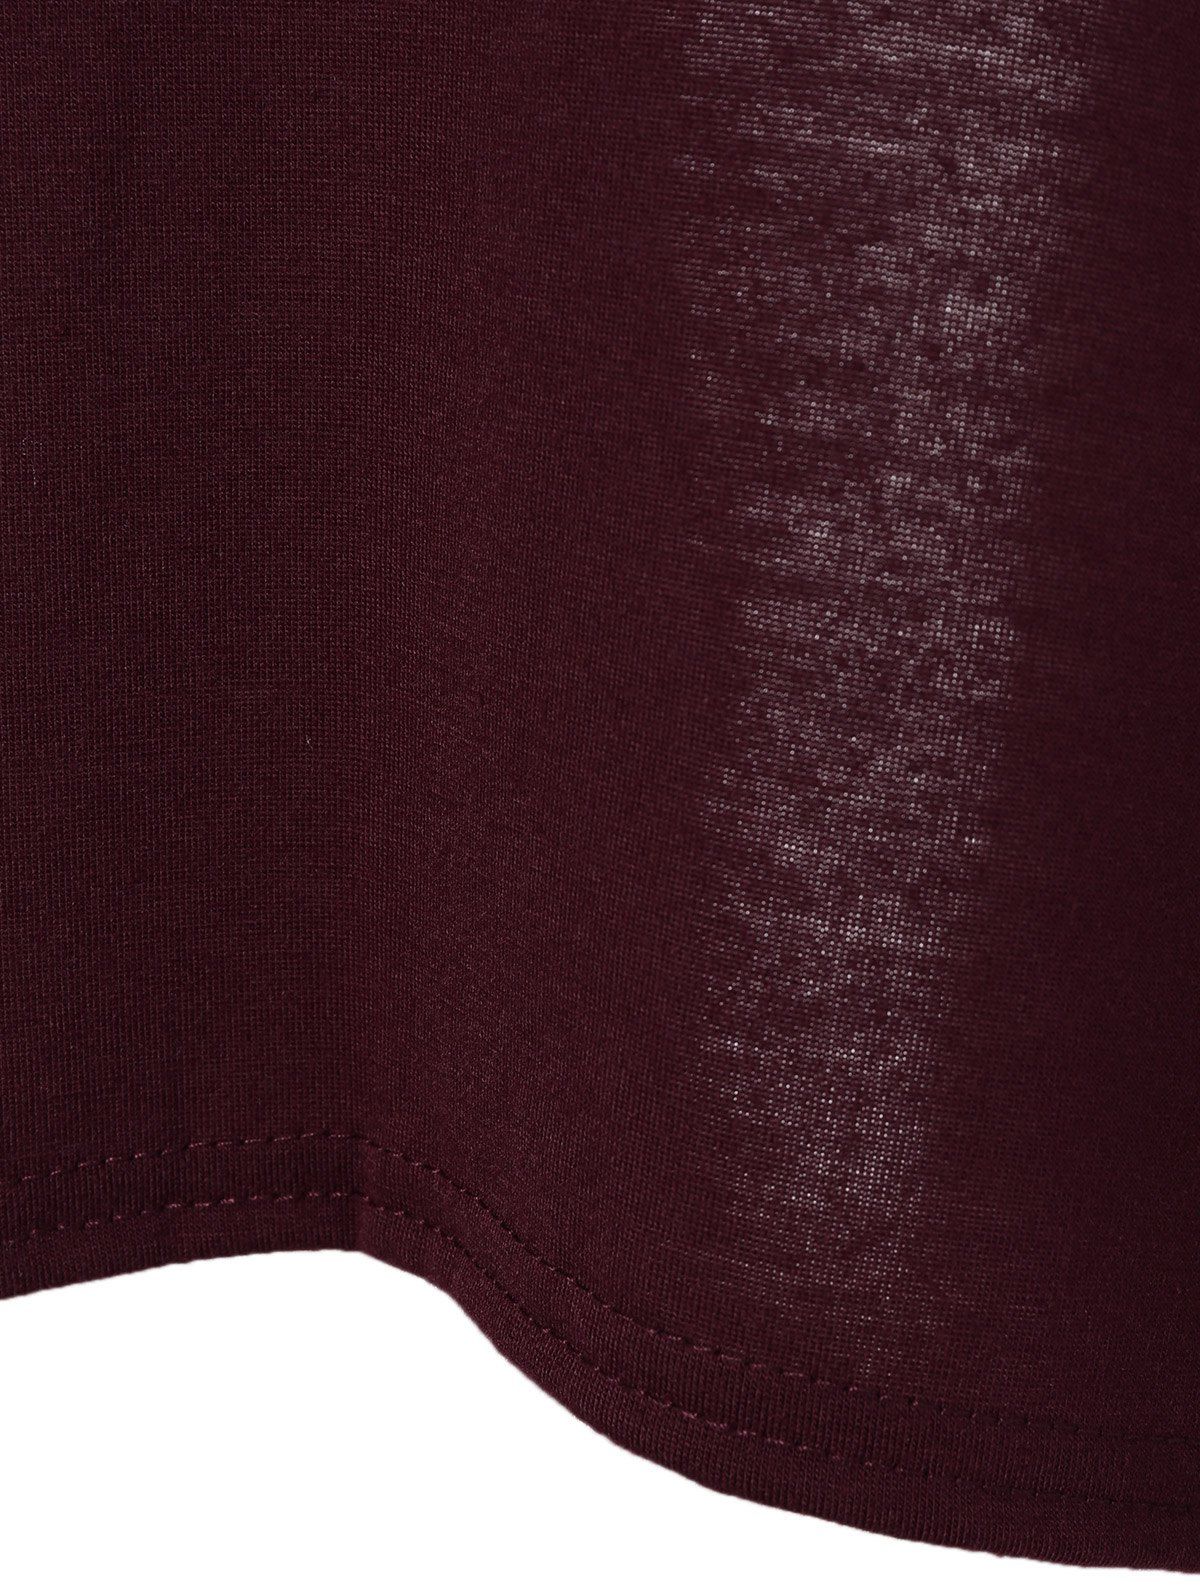 2018 Self-Tie Open Back T-Shirt WINE RED XL In Long Sleeves Online ...